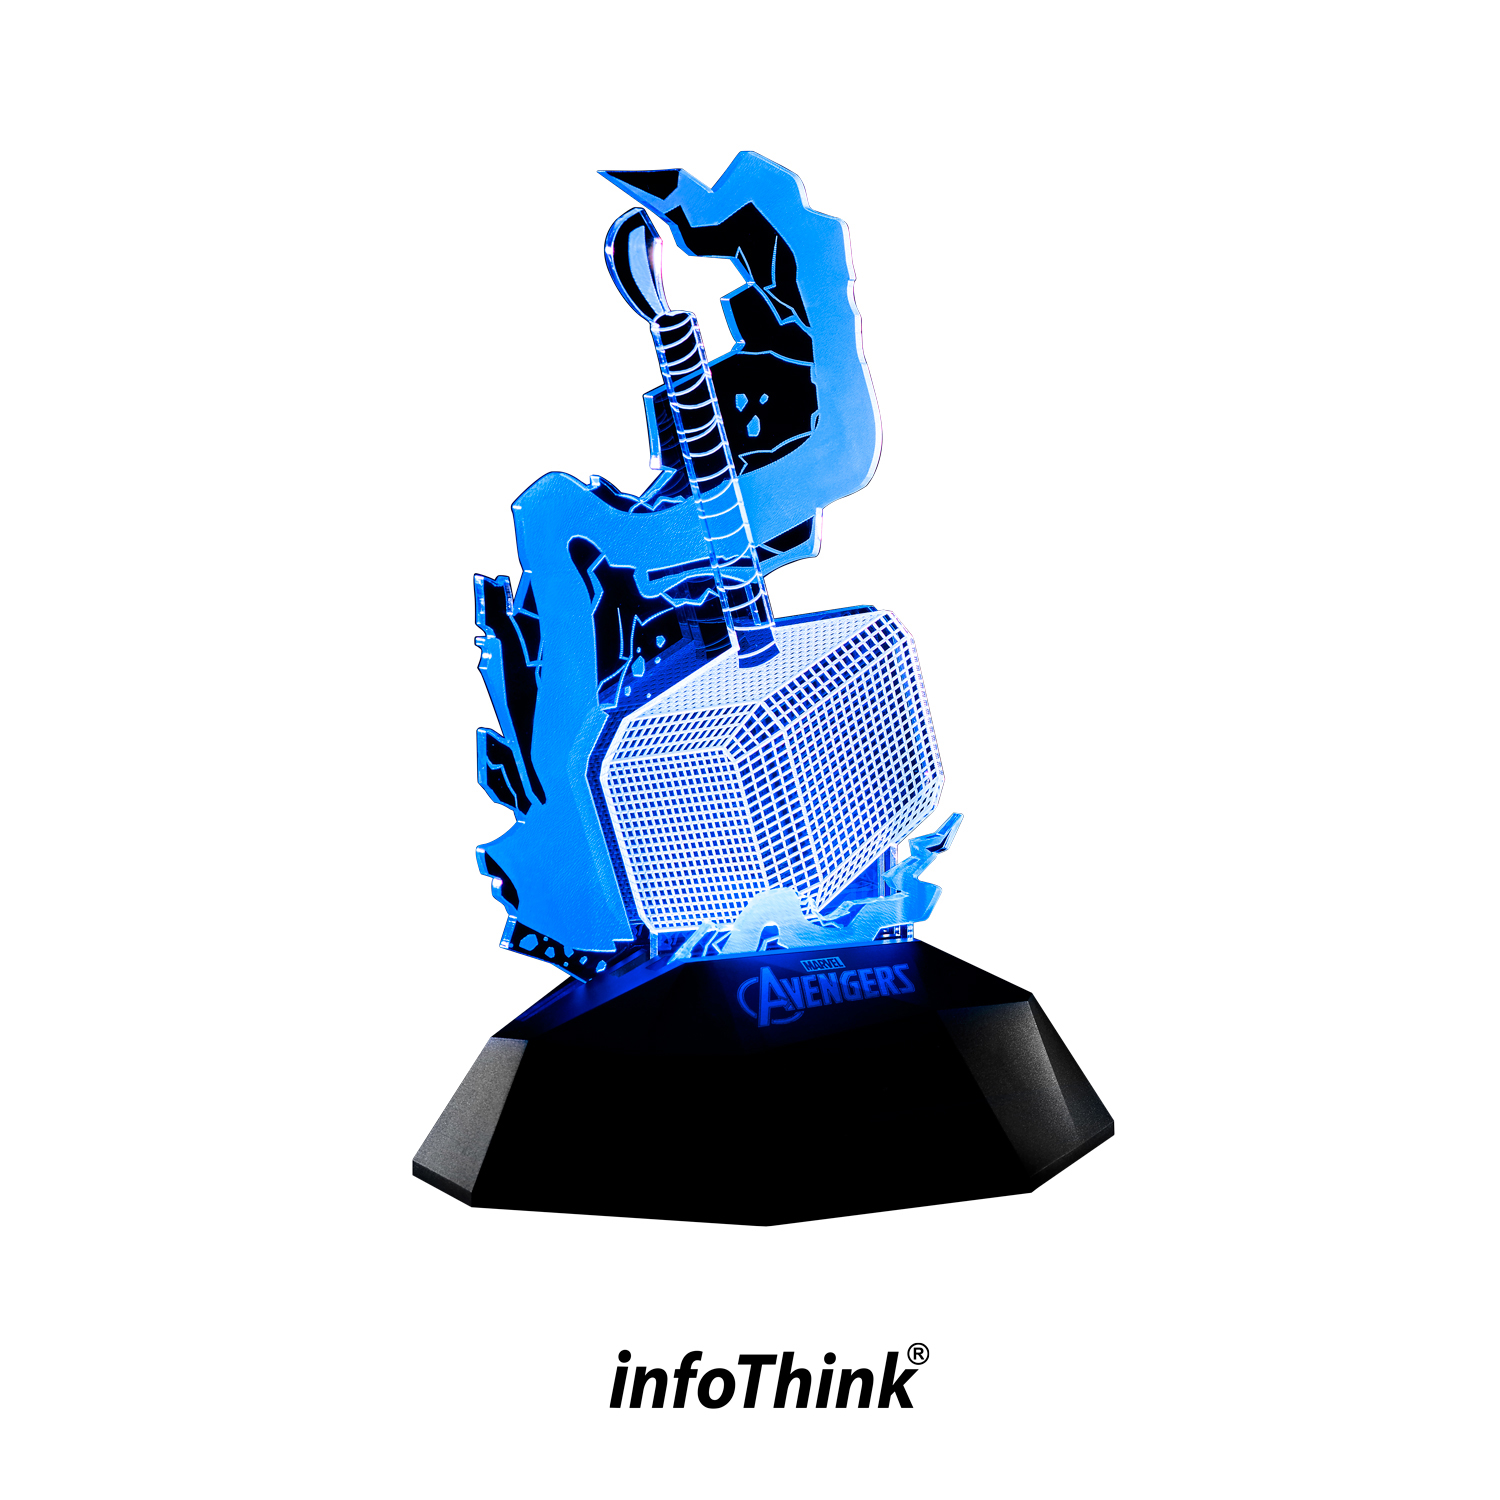 InfoThink 復仇者聯盟3D立體光燈/情境燈(可同步充手機) 雷神鎚